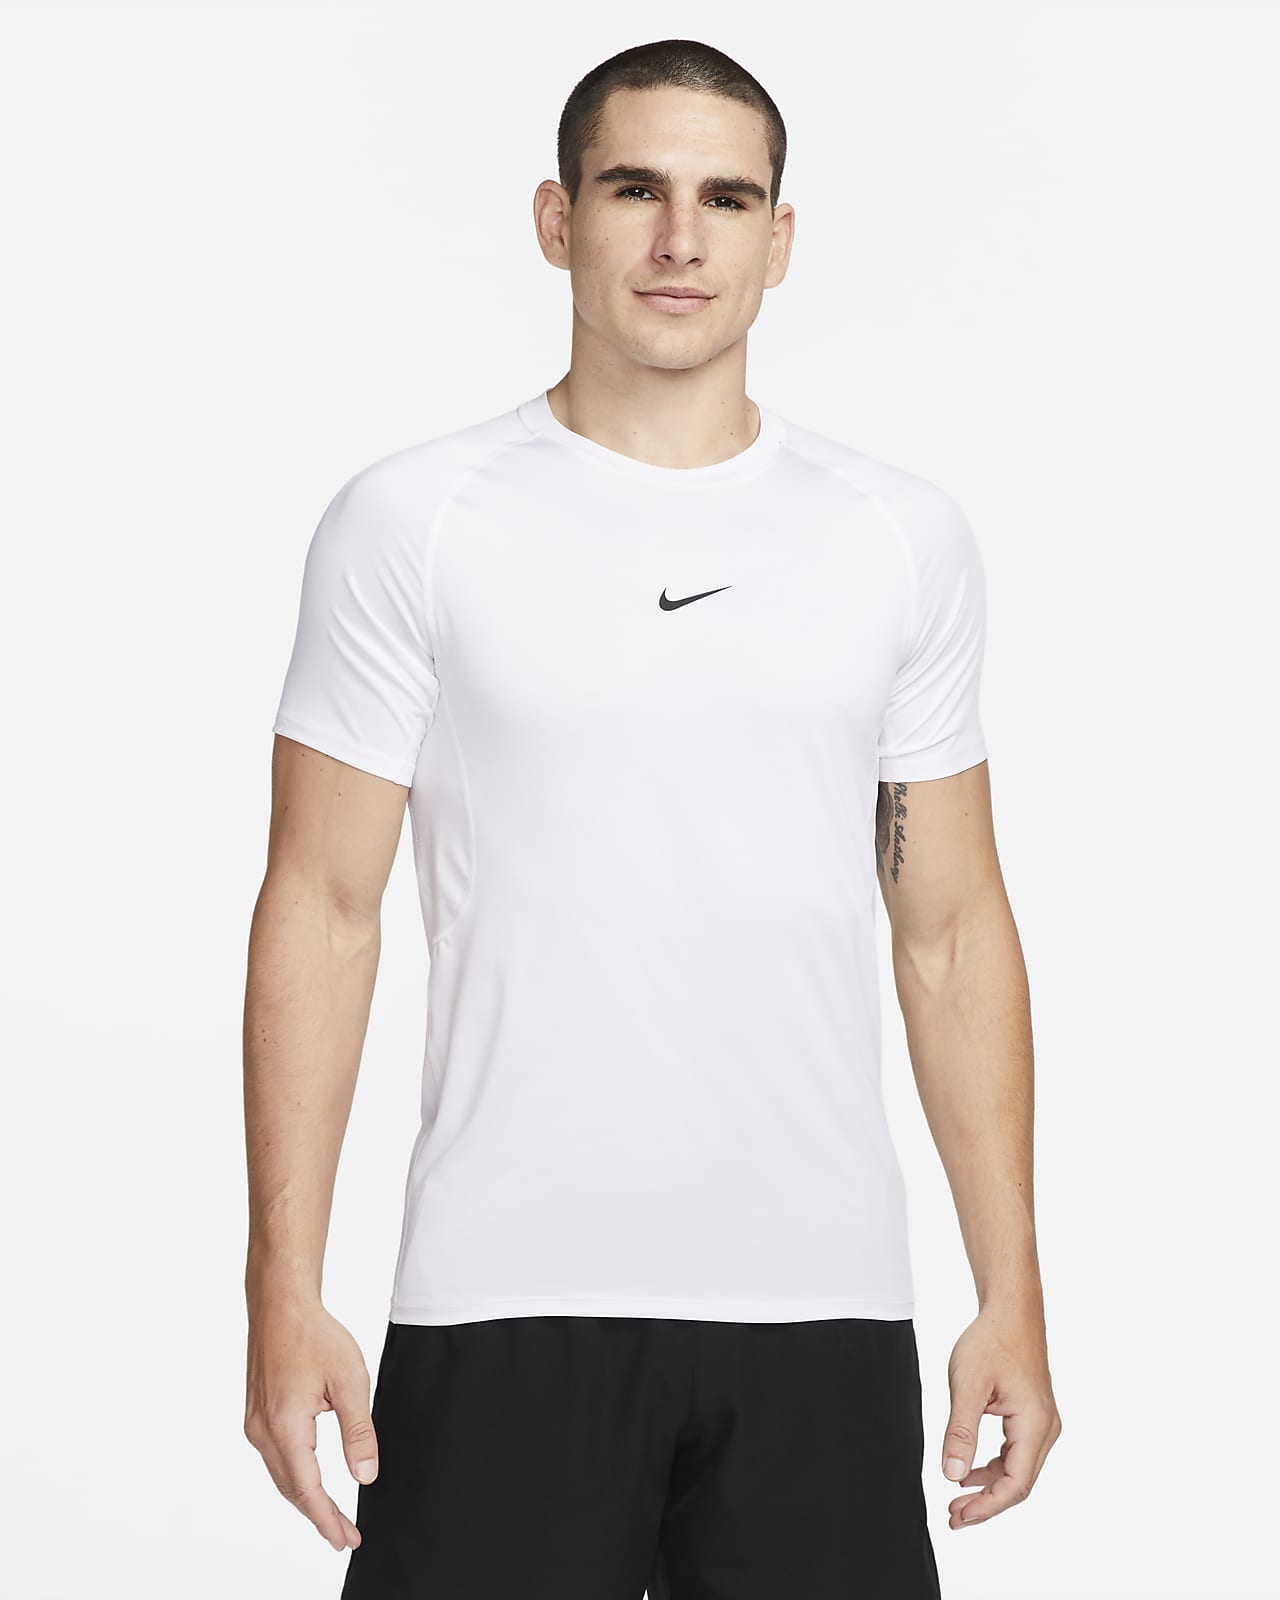 Nike Men's Dri-Fit Pro Compression Short Sleeve T-shirt Sports Gym Tight  Tee